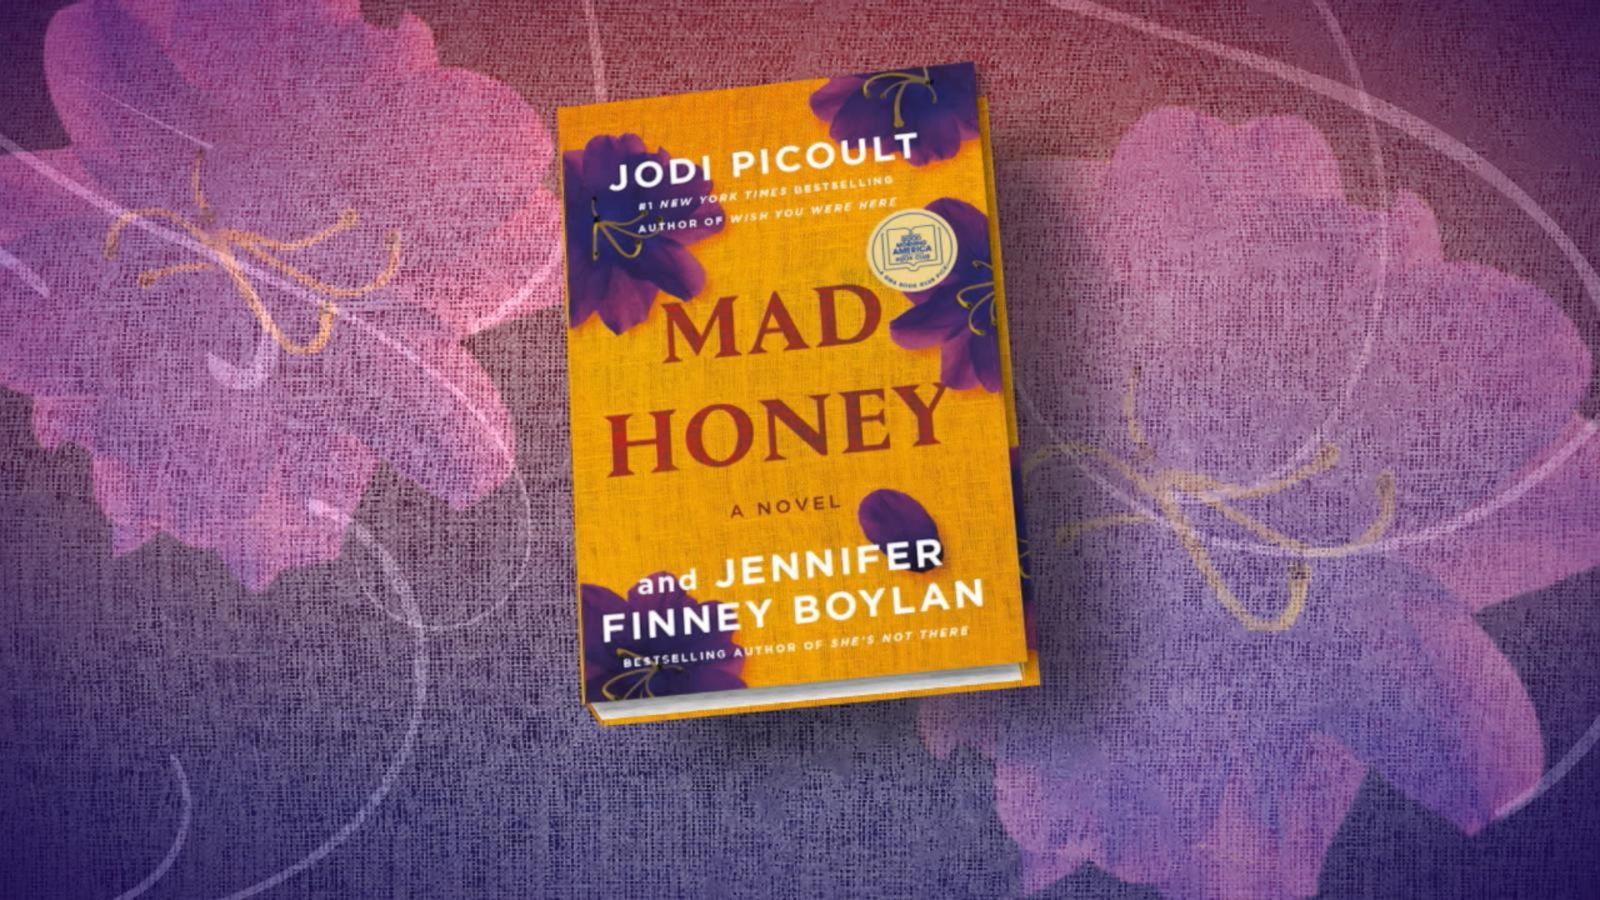 GMA Book Club 'Mad Honey' by Jennifer Finney Boylan and Jodi Picoult